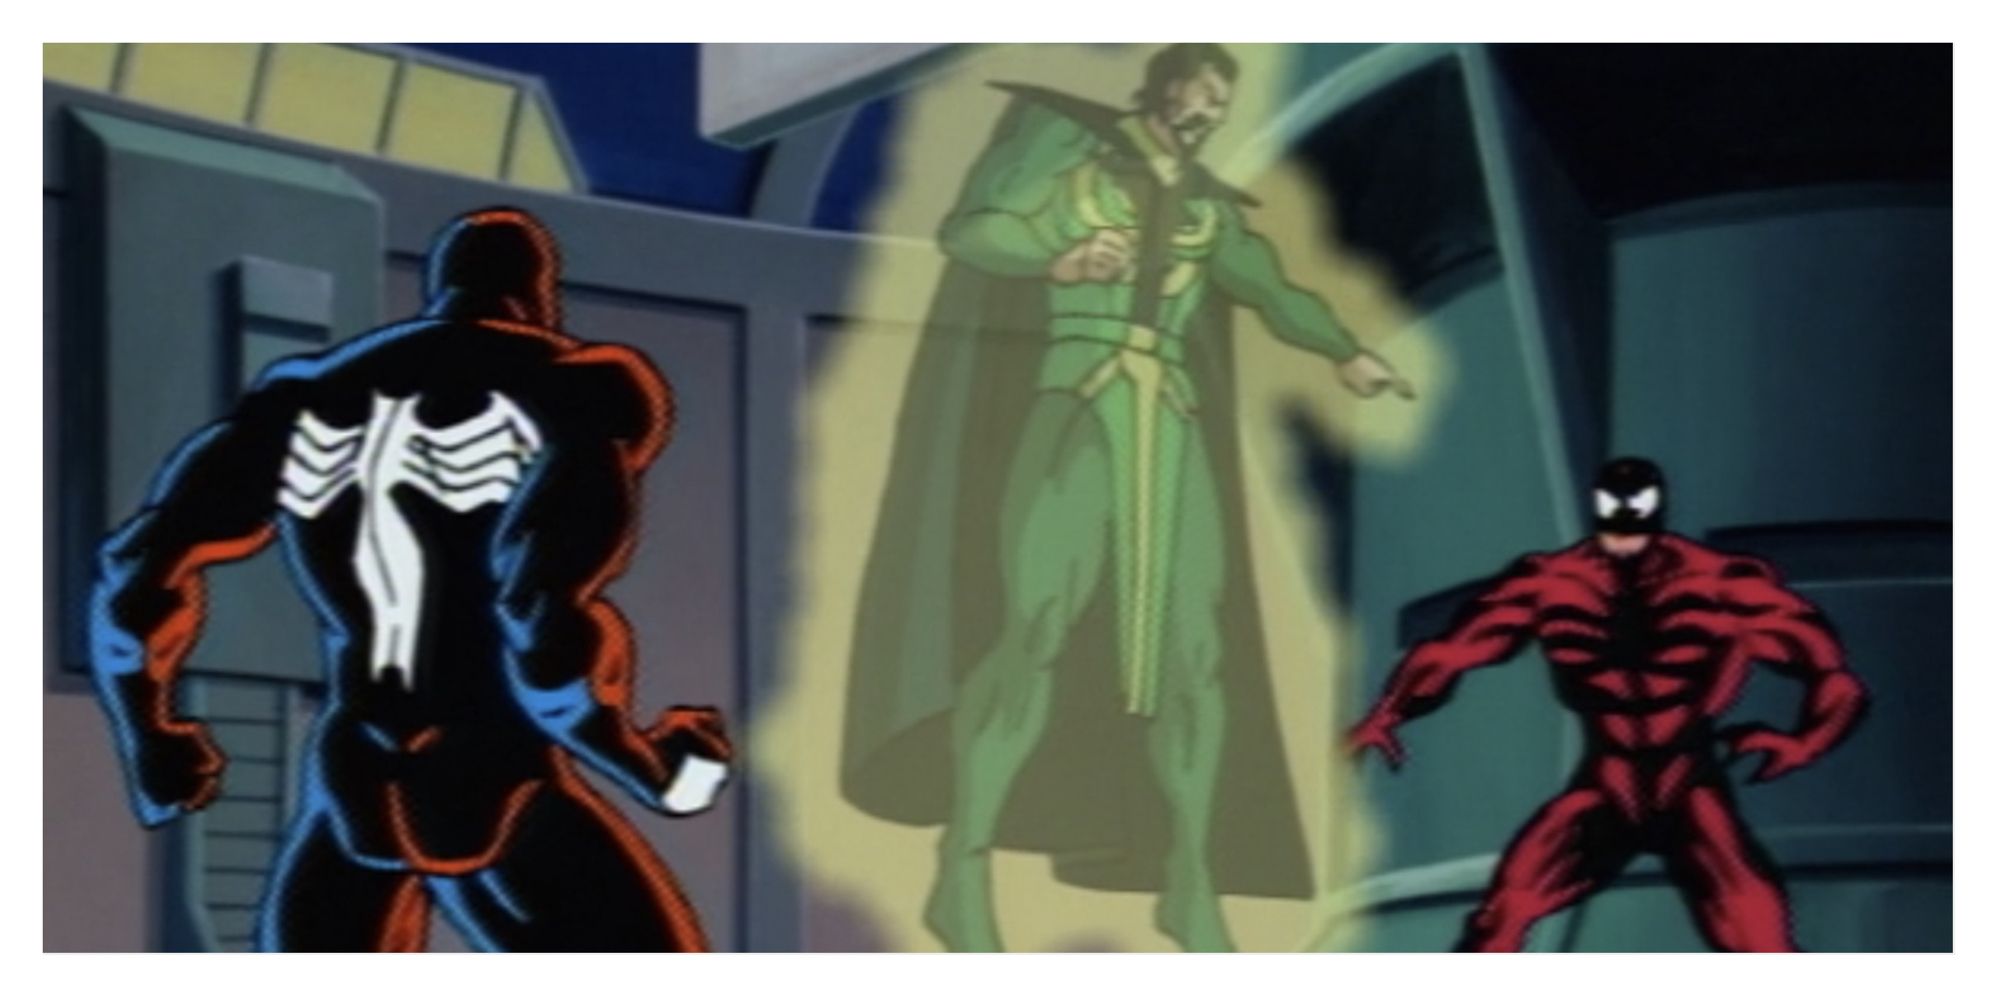 Venom (left), Mordo (middle), Carnage (right)